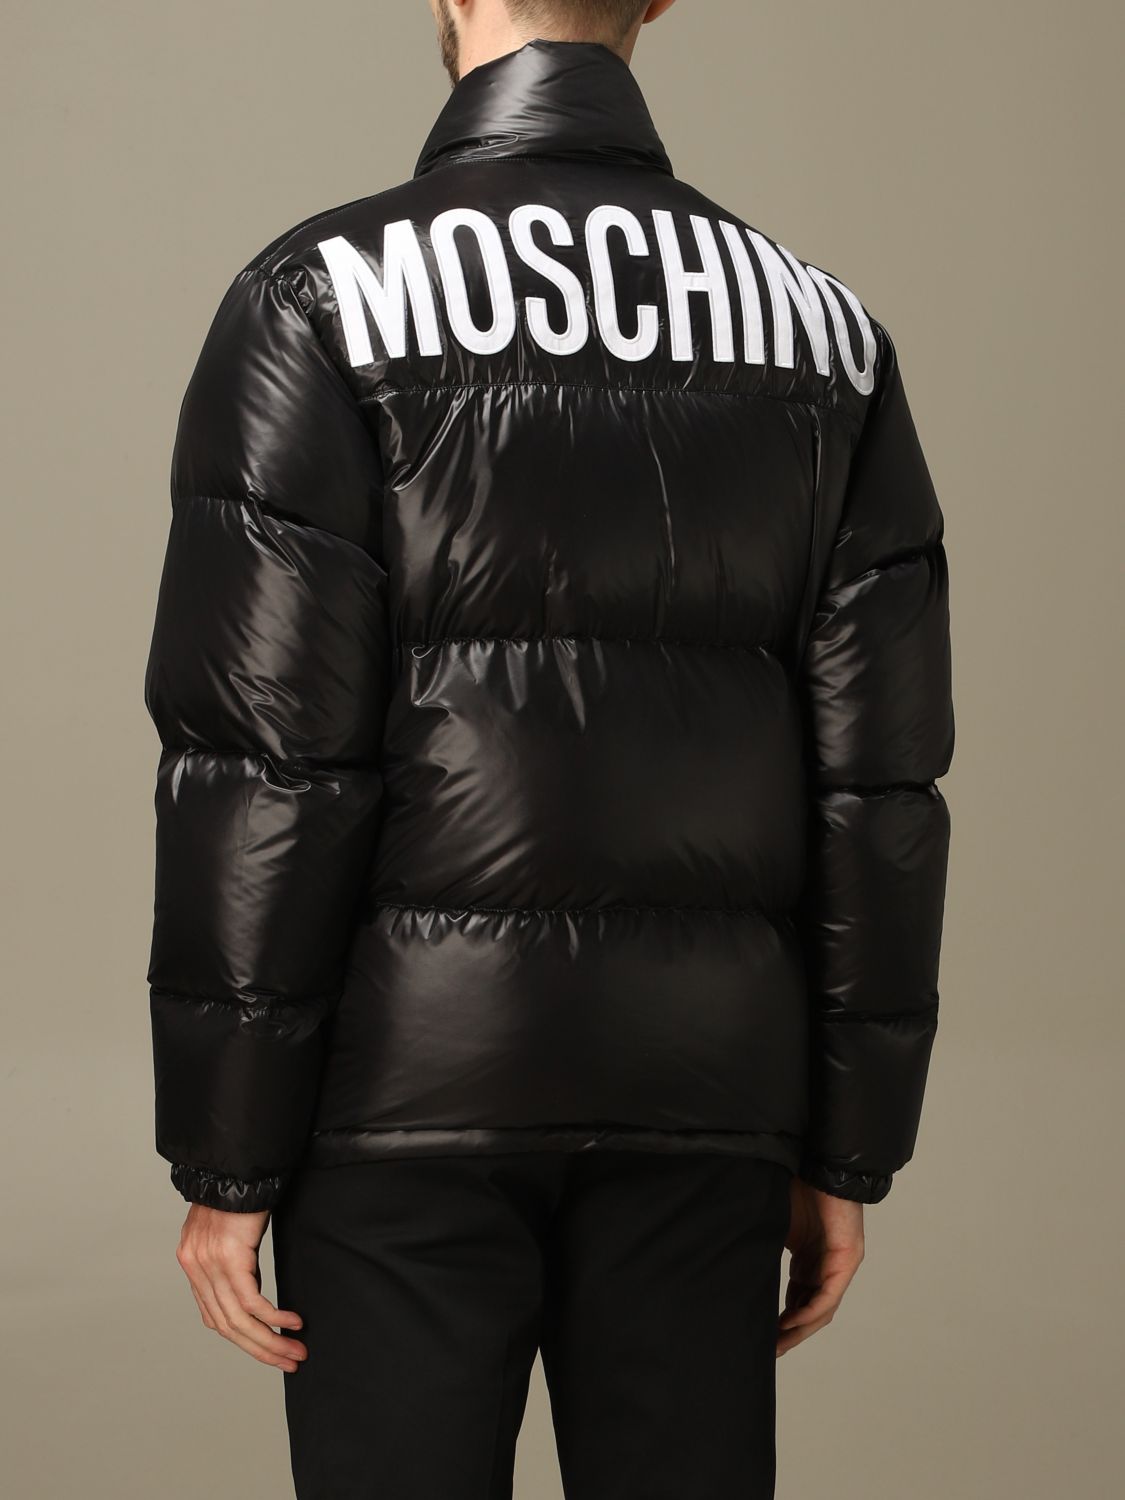 moschino coats mens